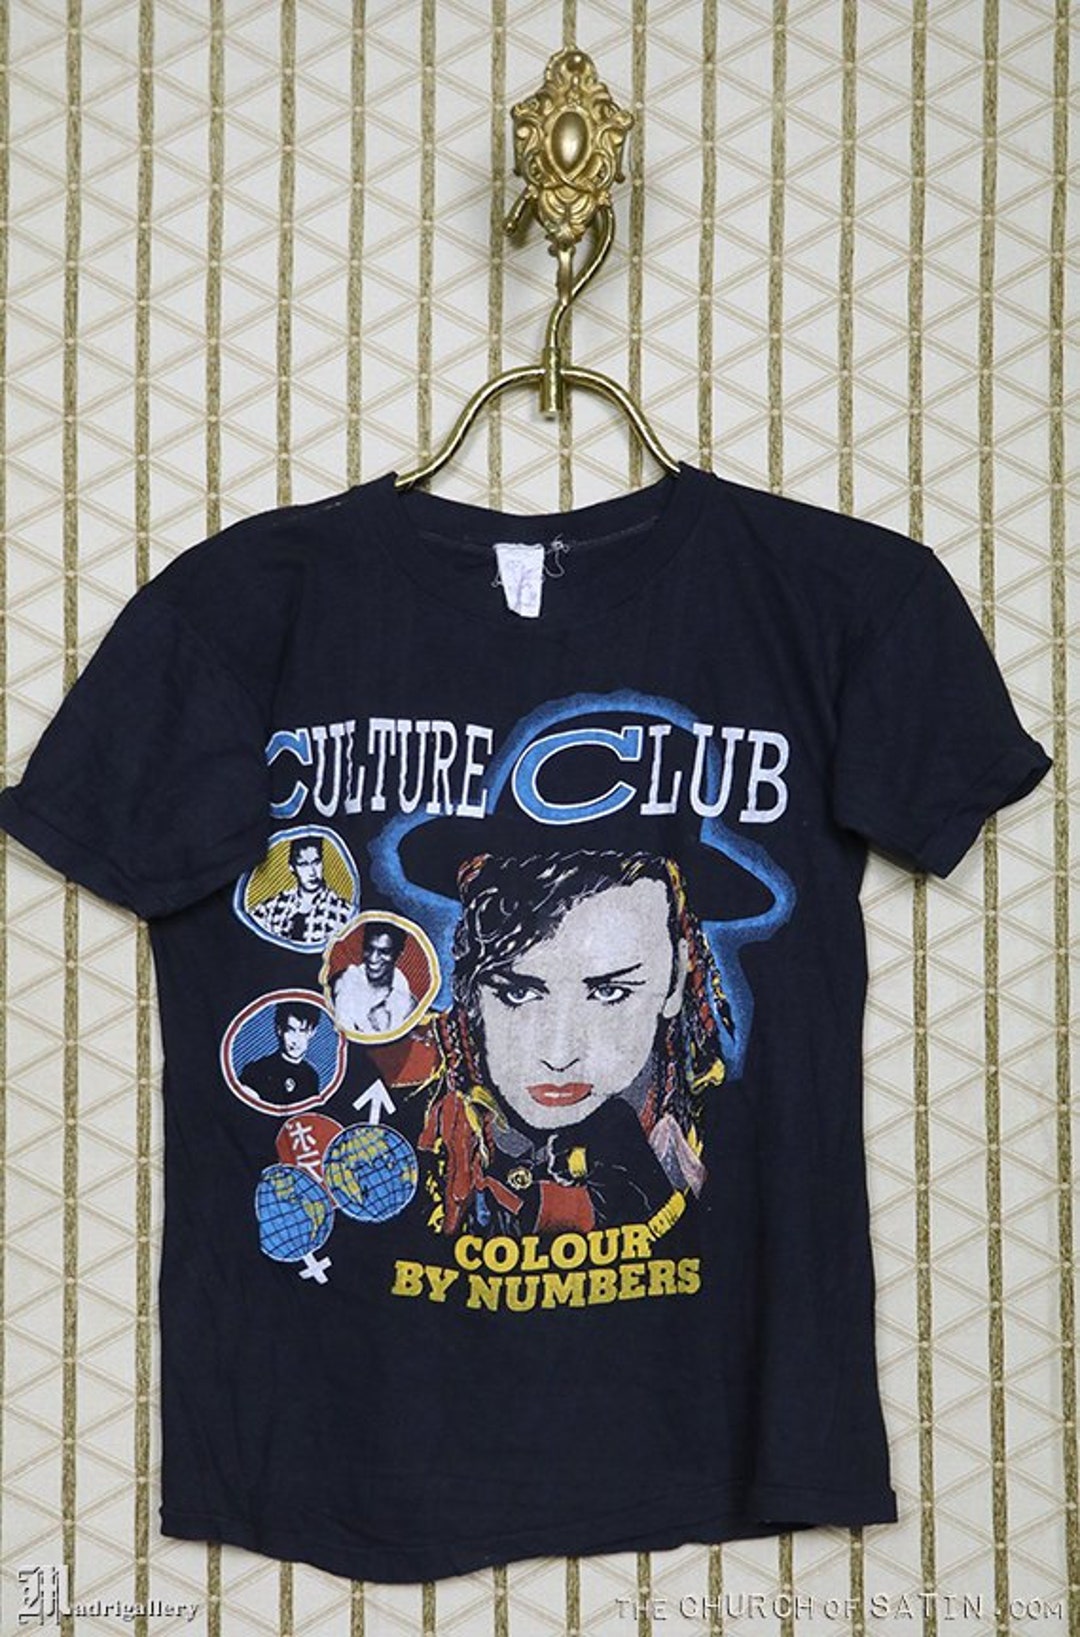 Culture Club T-shirt Vintage Rare Boy George Black Tee Shirt - Etsy